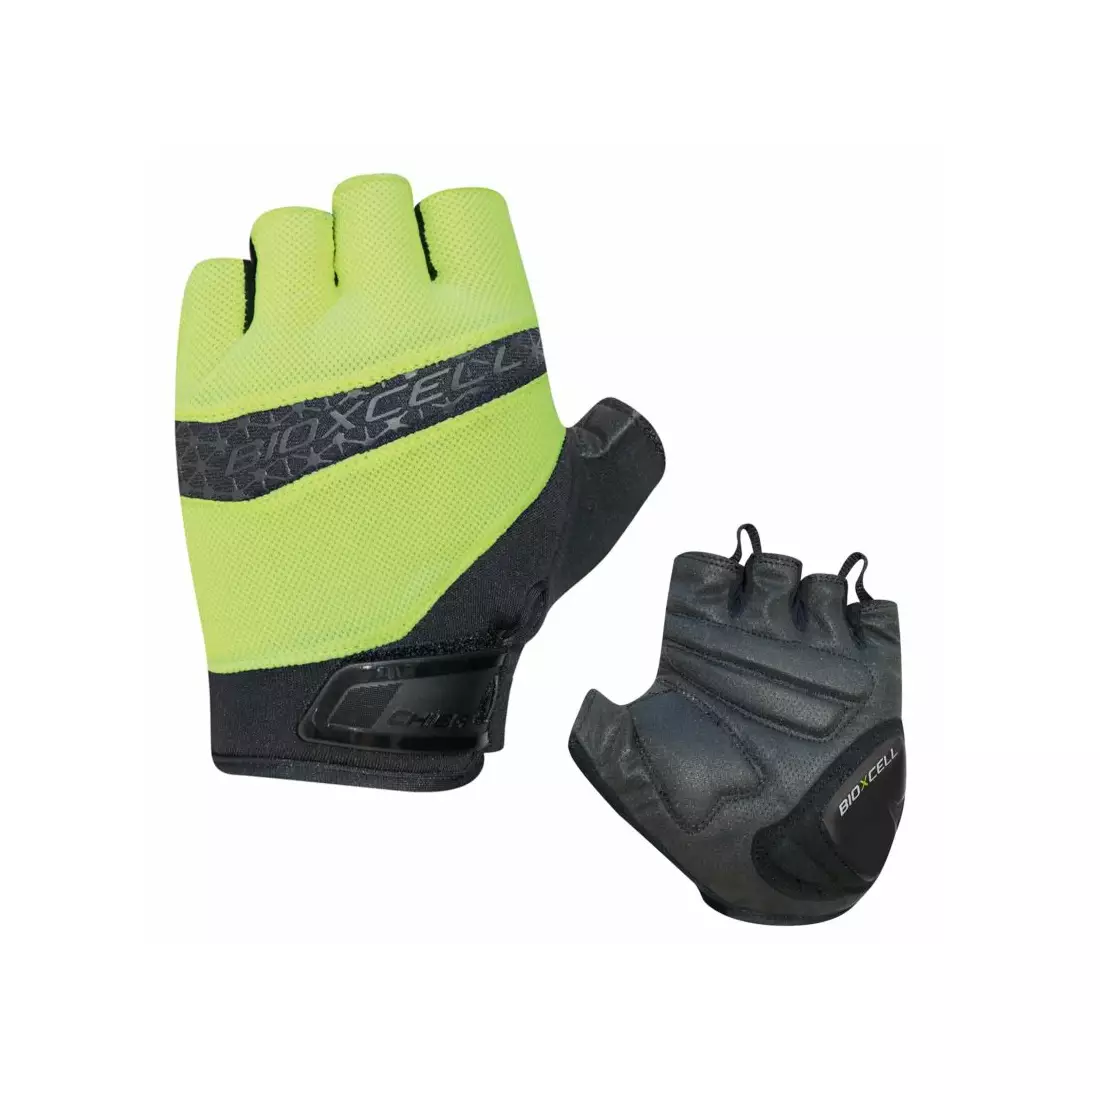 CHIBA BIOXCELL PRO cycling gloves, black-fluorine